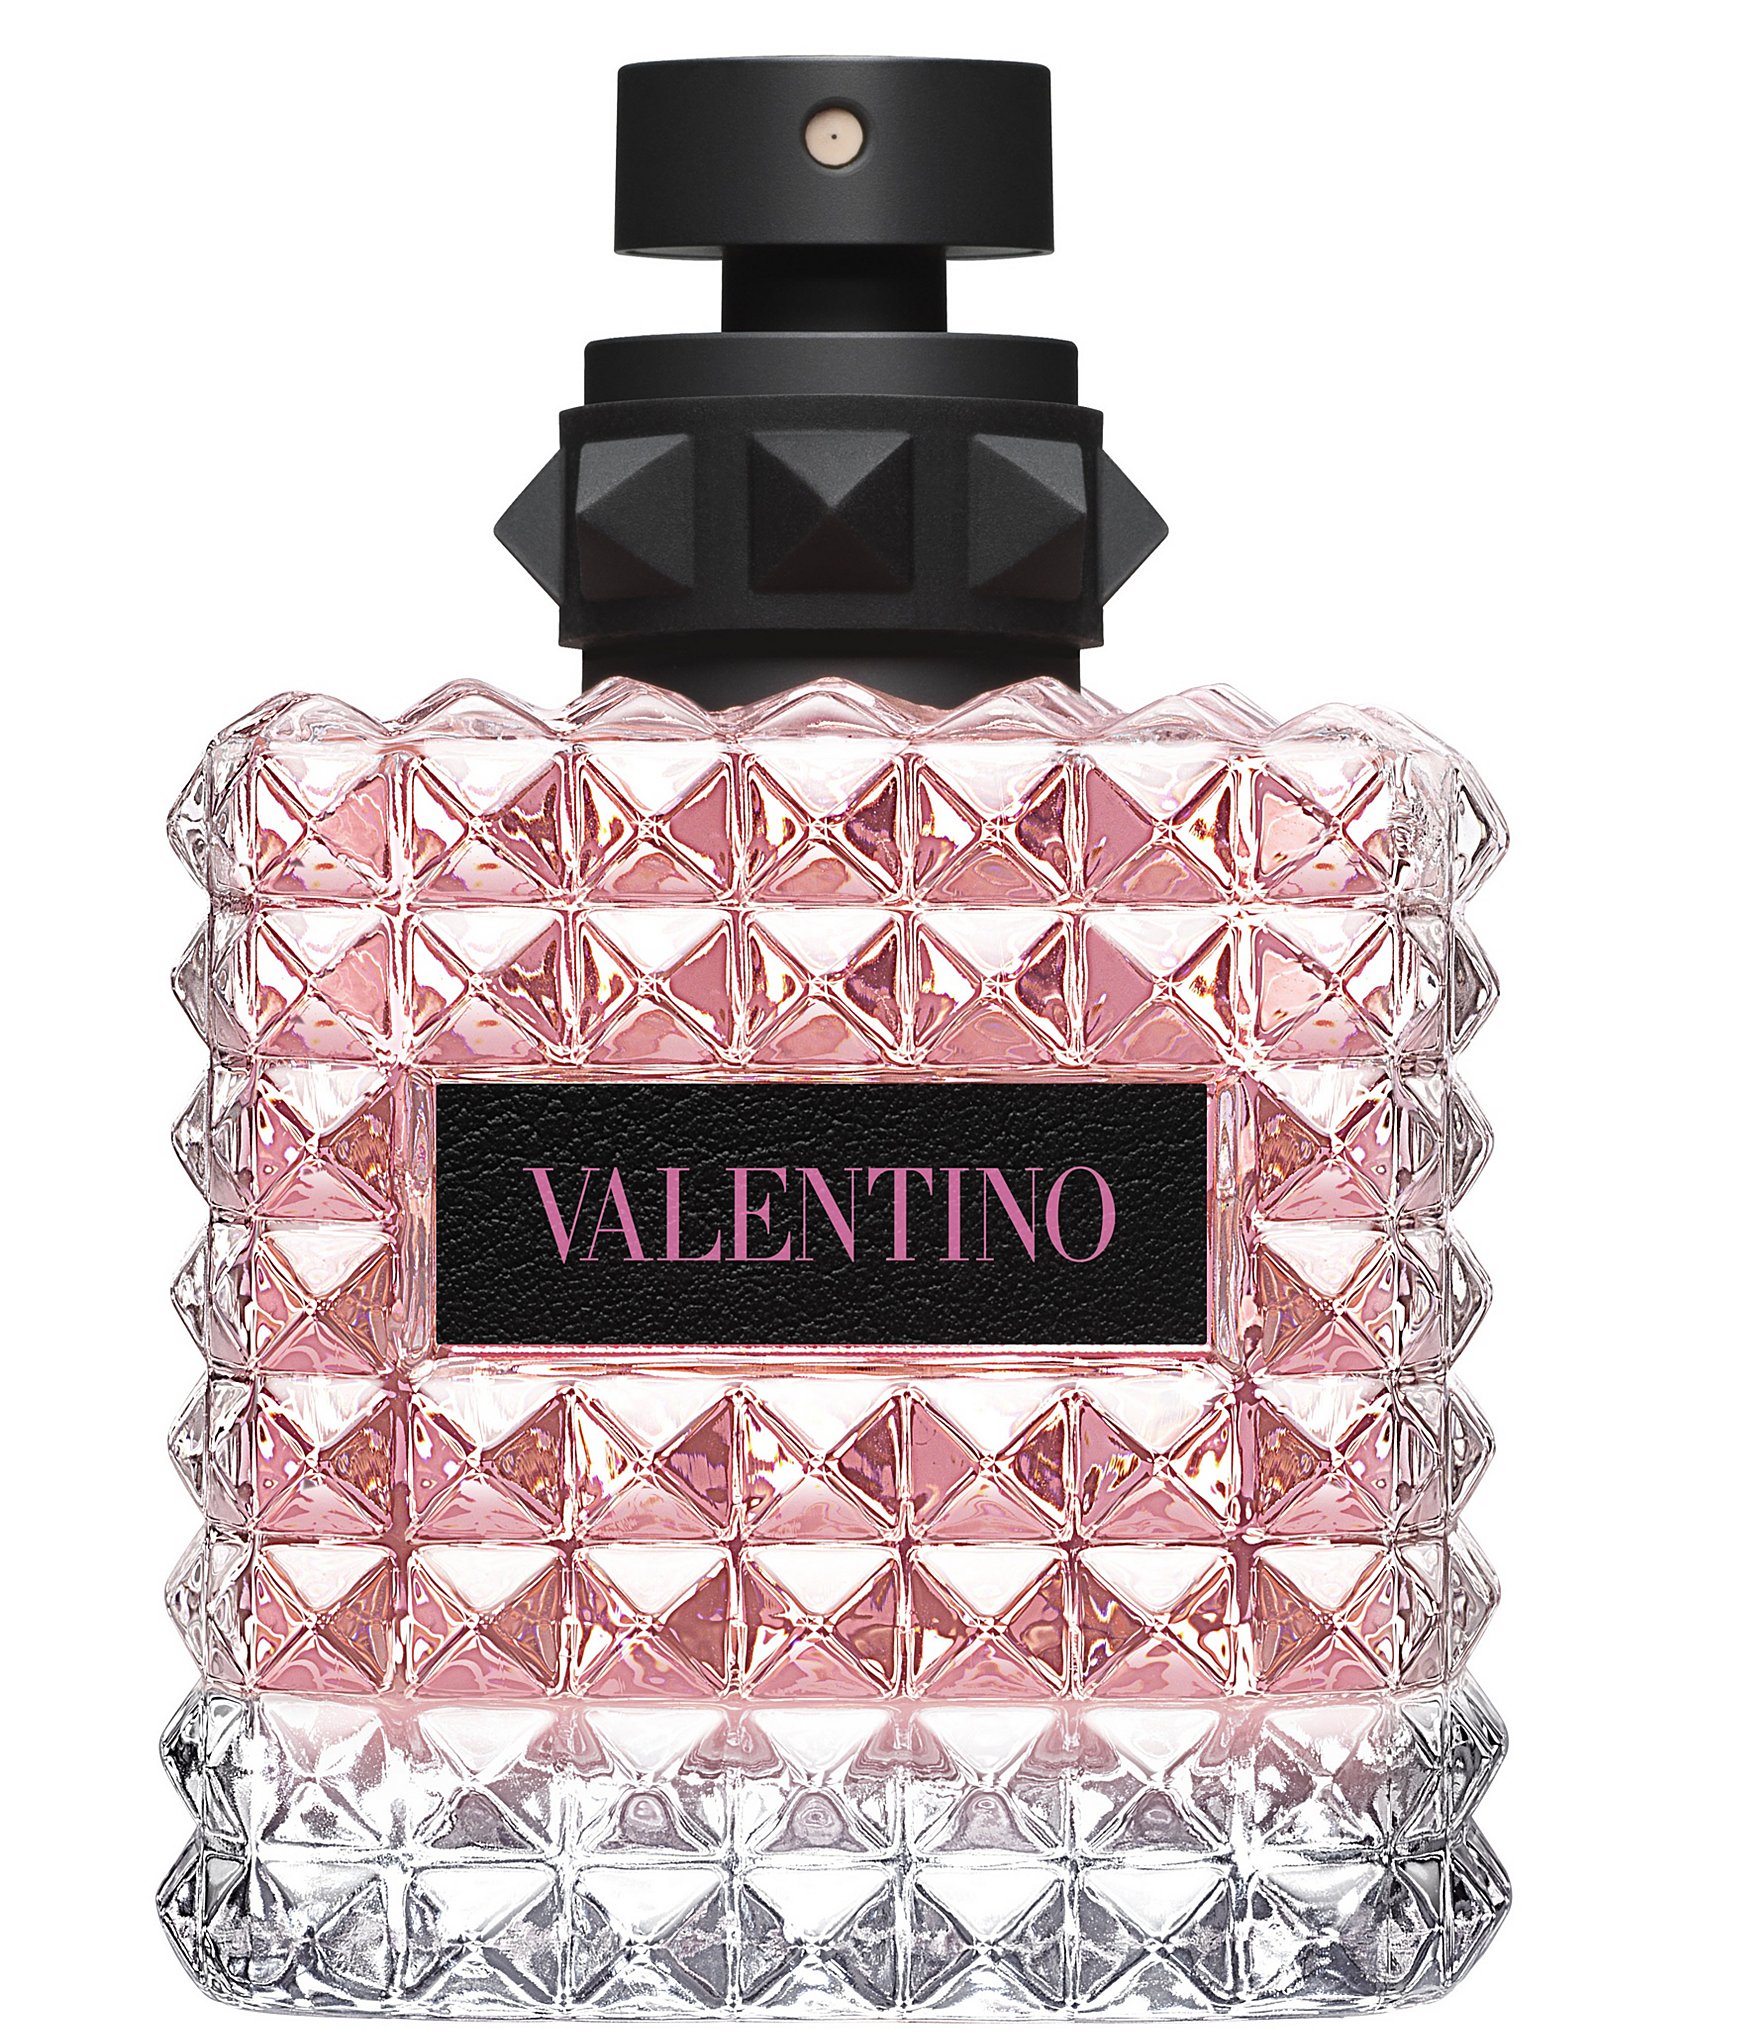 Dillards Valentino Perfume Online | website.jkuat.ac.ke